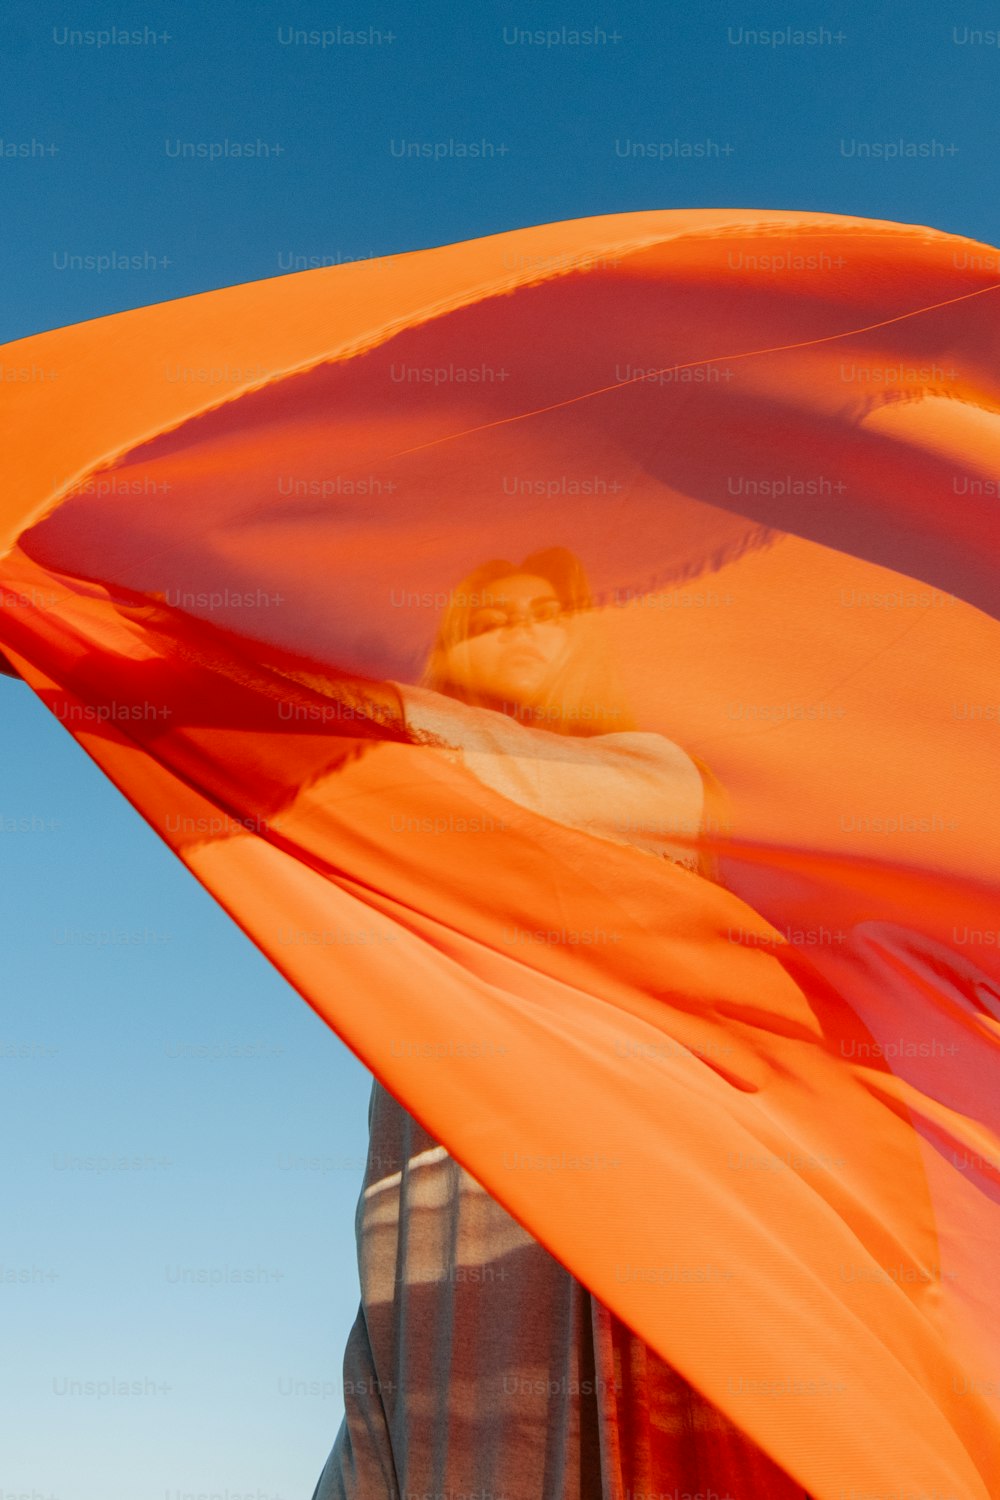 Un hombre sosteniendo una gran cometa naranja en el aire